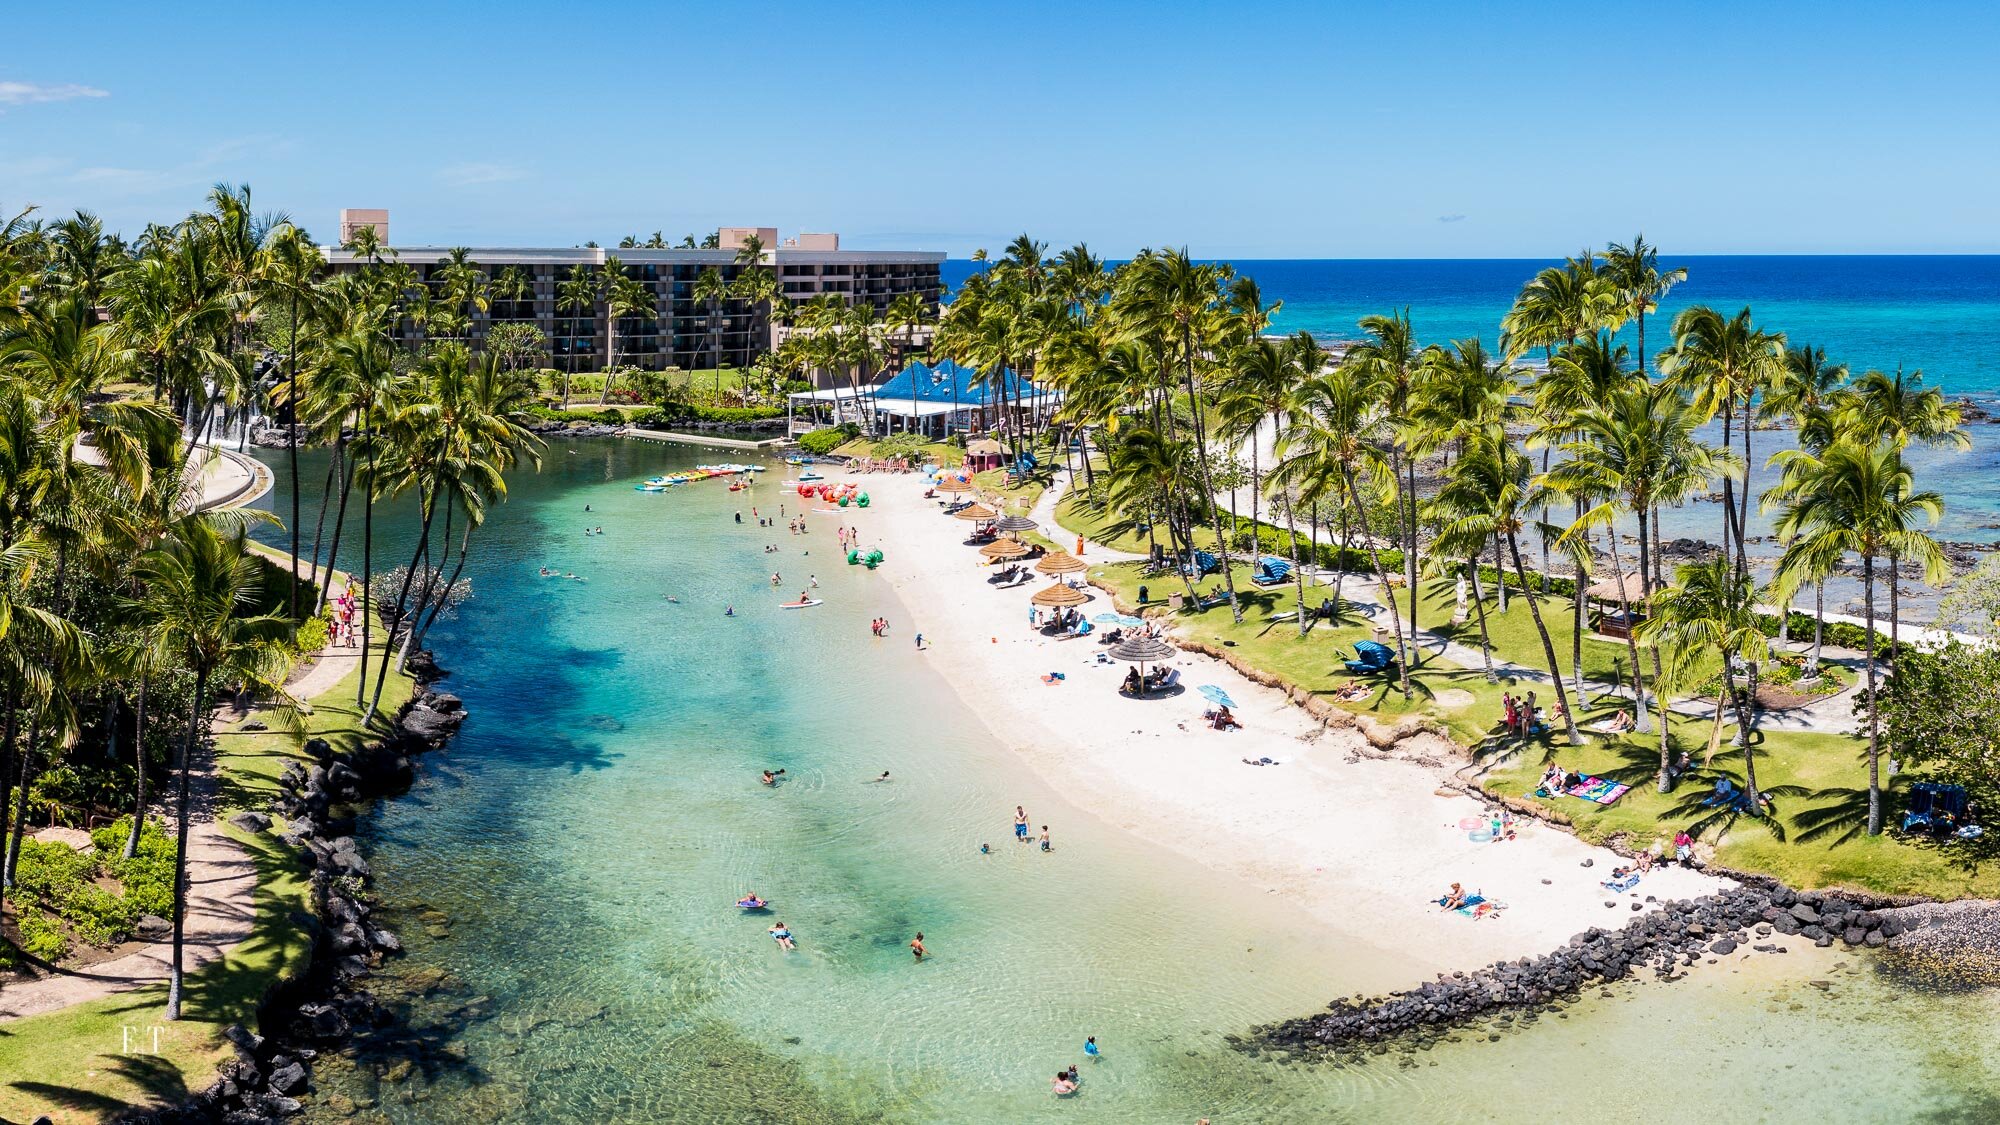 Hilton Waikoloa Village Resort on Hawaii Island